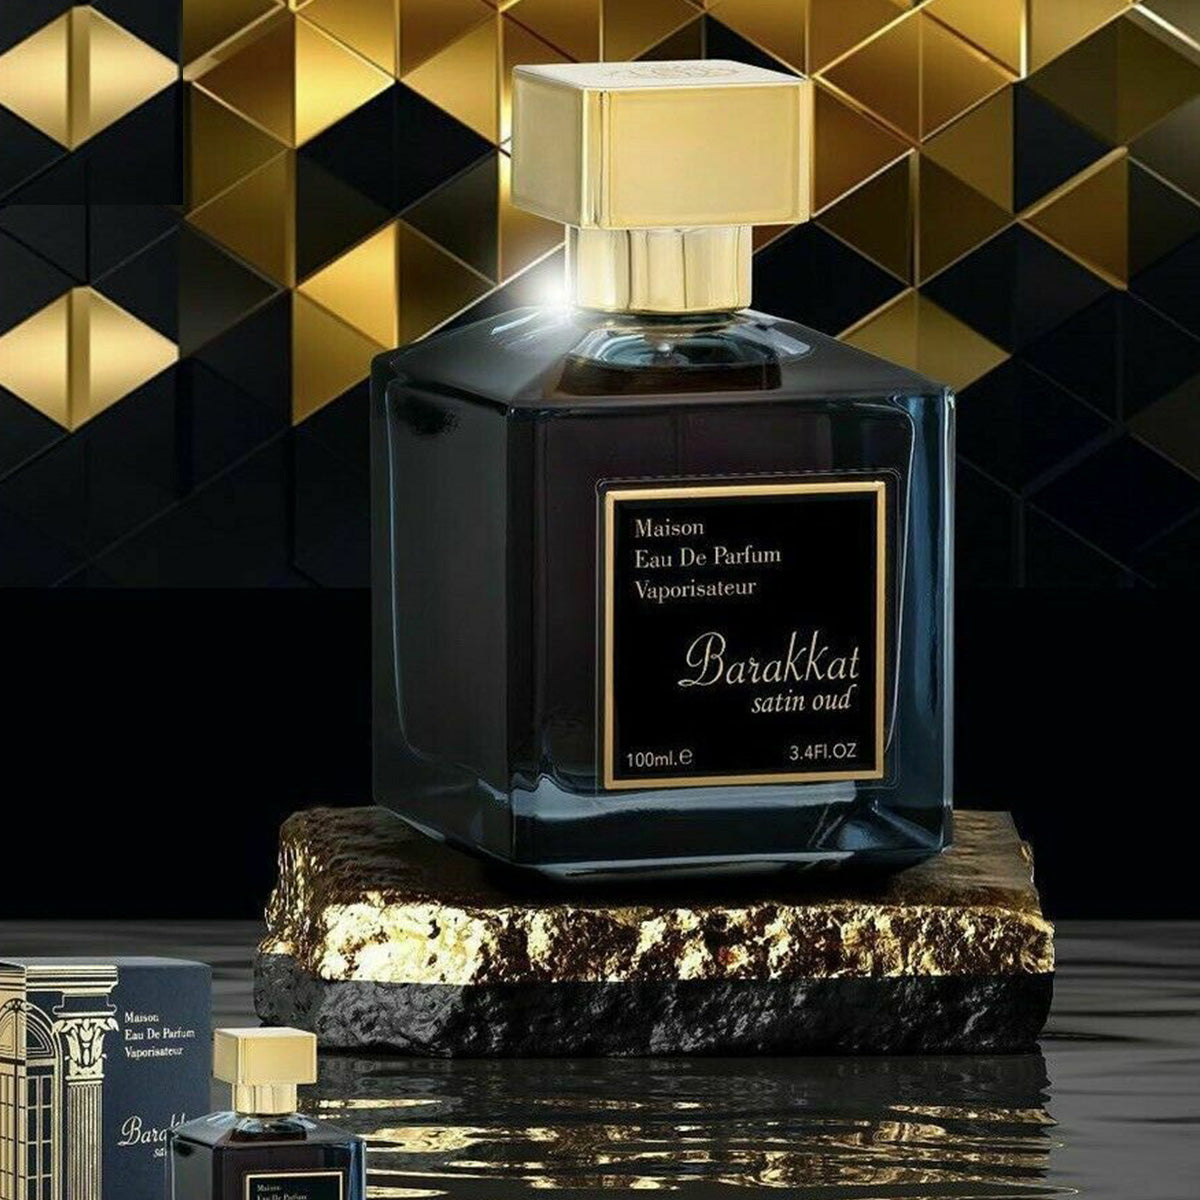 Barakkat Satin Oud Maison Eau de Parfum 100ml Fragrance World-Perfume Heaven